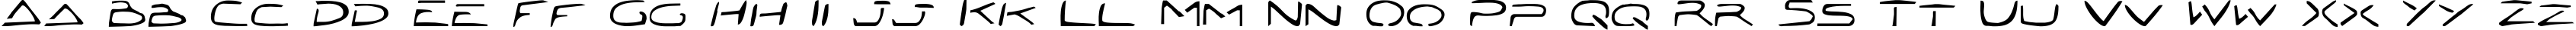 Пример написания английского алфавита шрифтом Jetta Tech